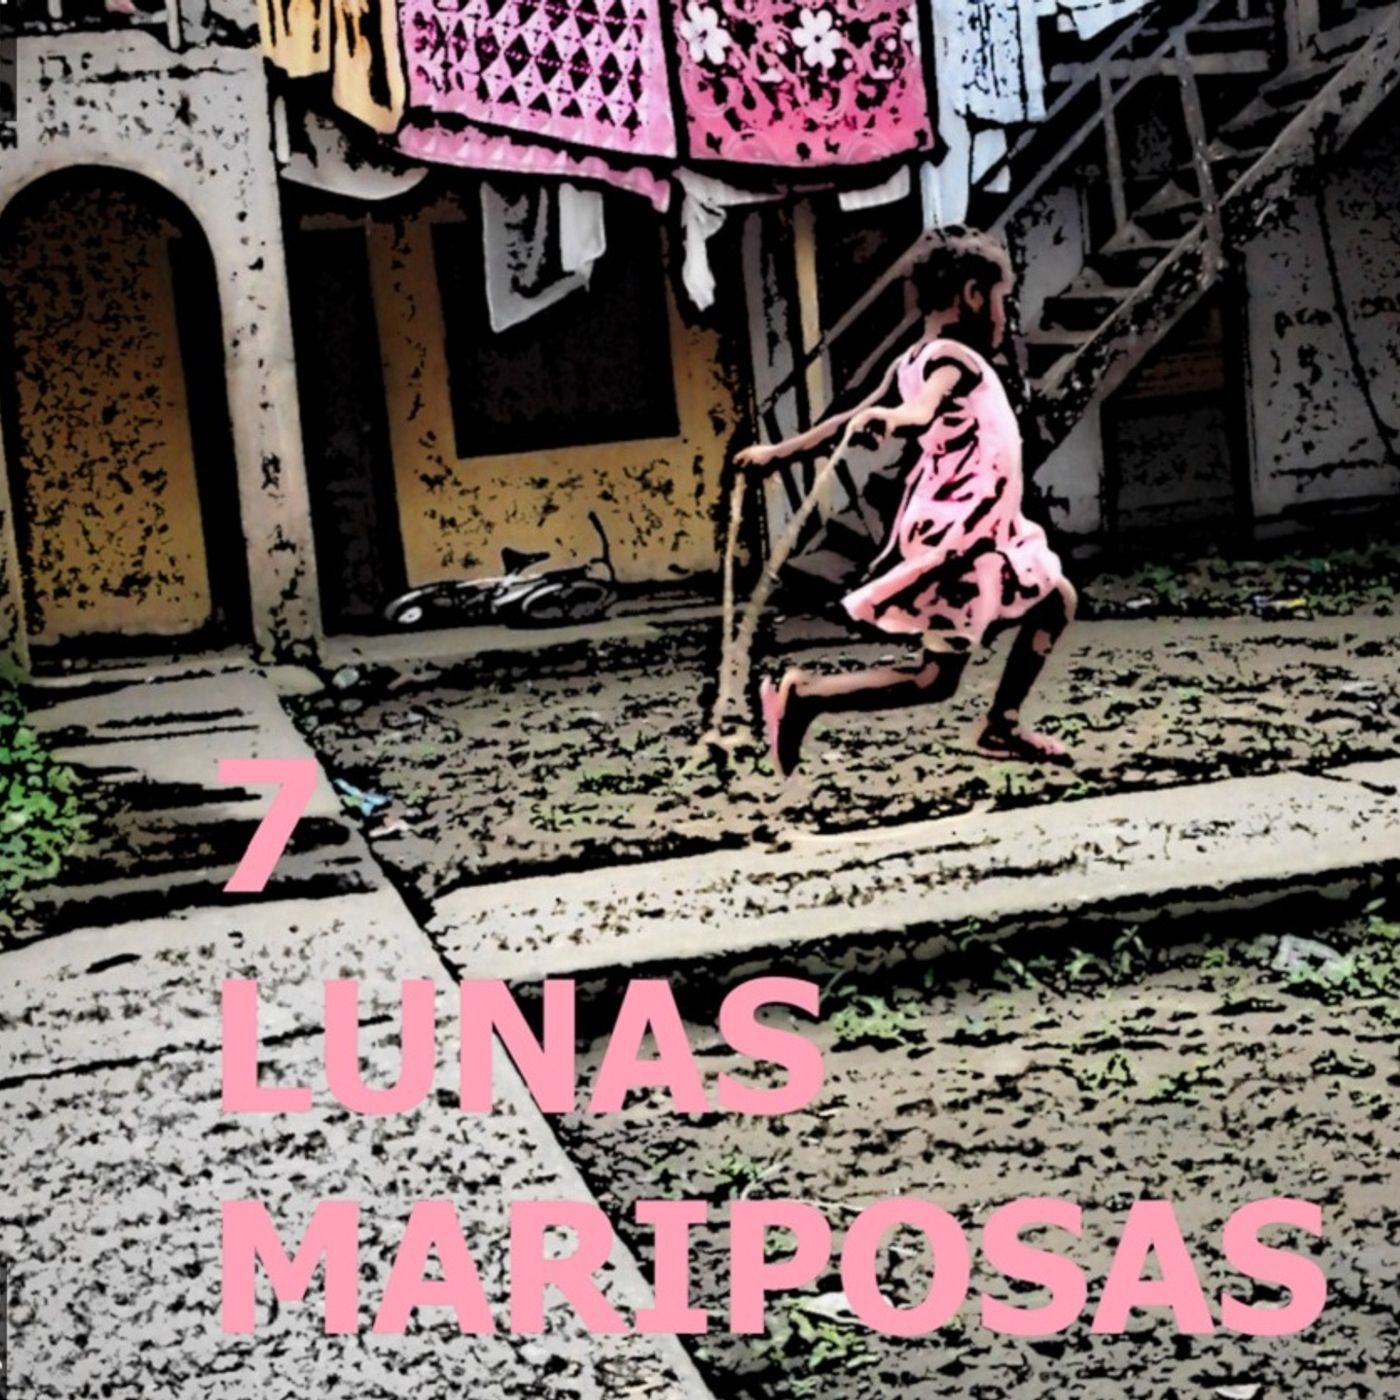 7 Lunas Mariposas